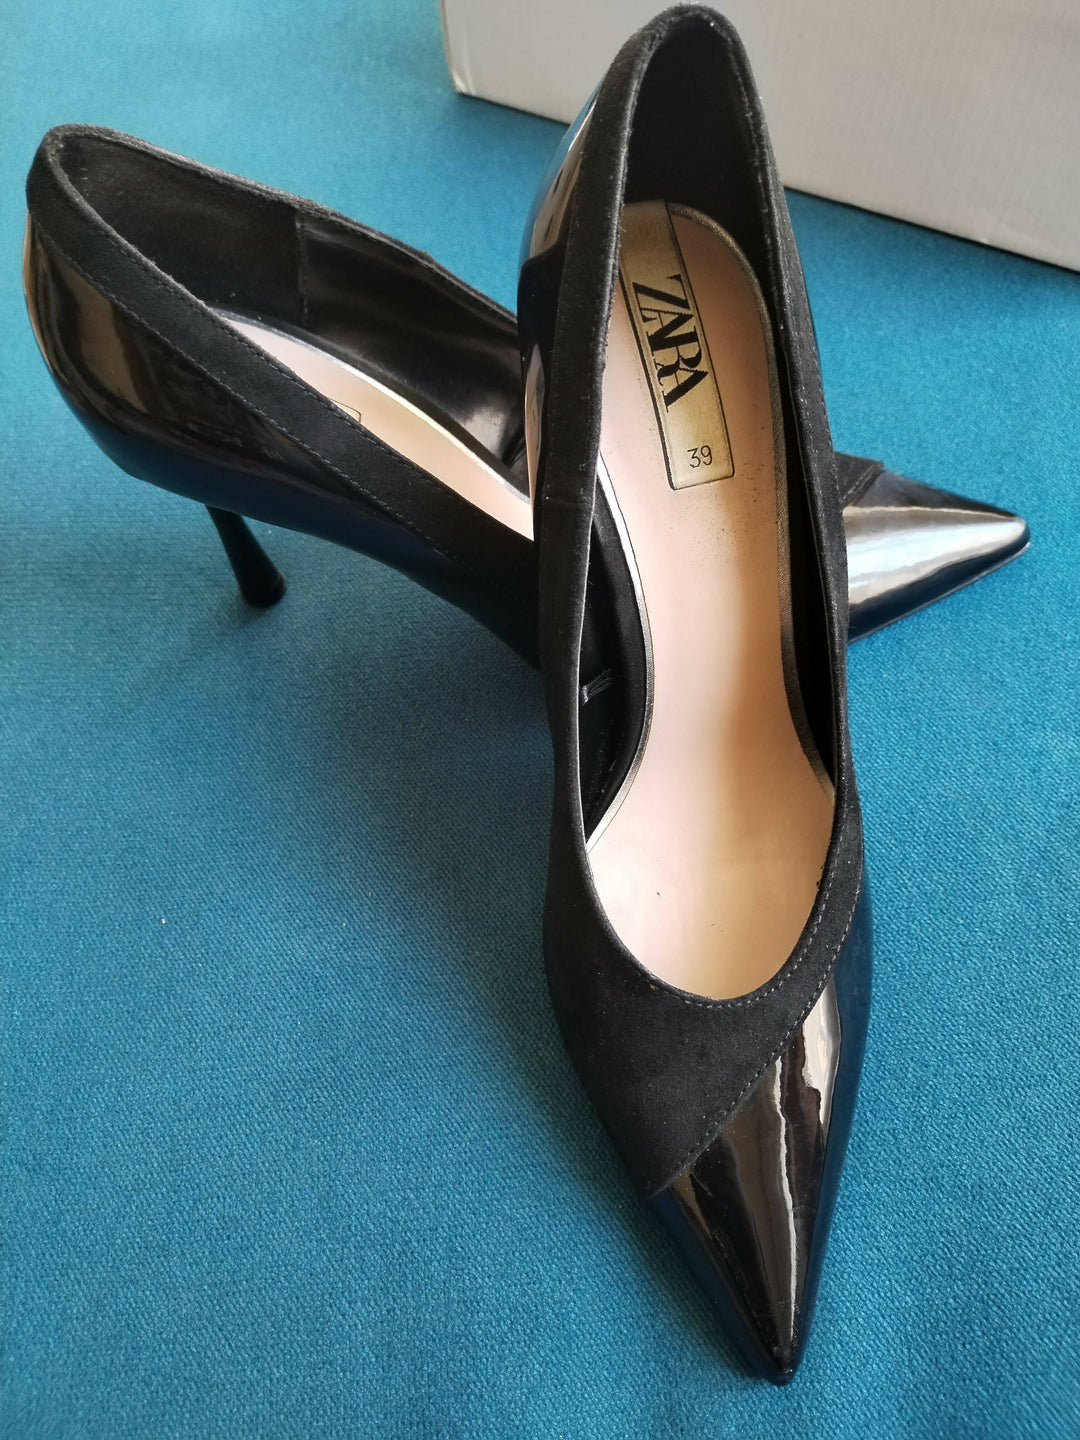 Image of Black Heels From Zara